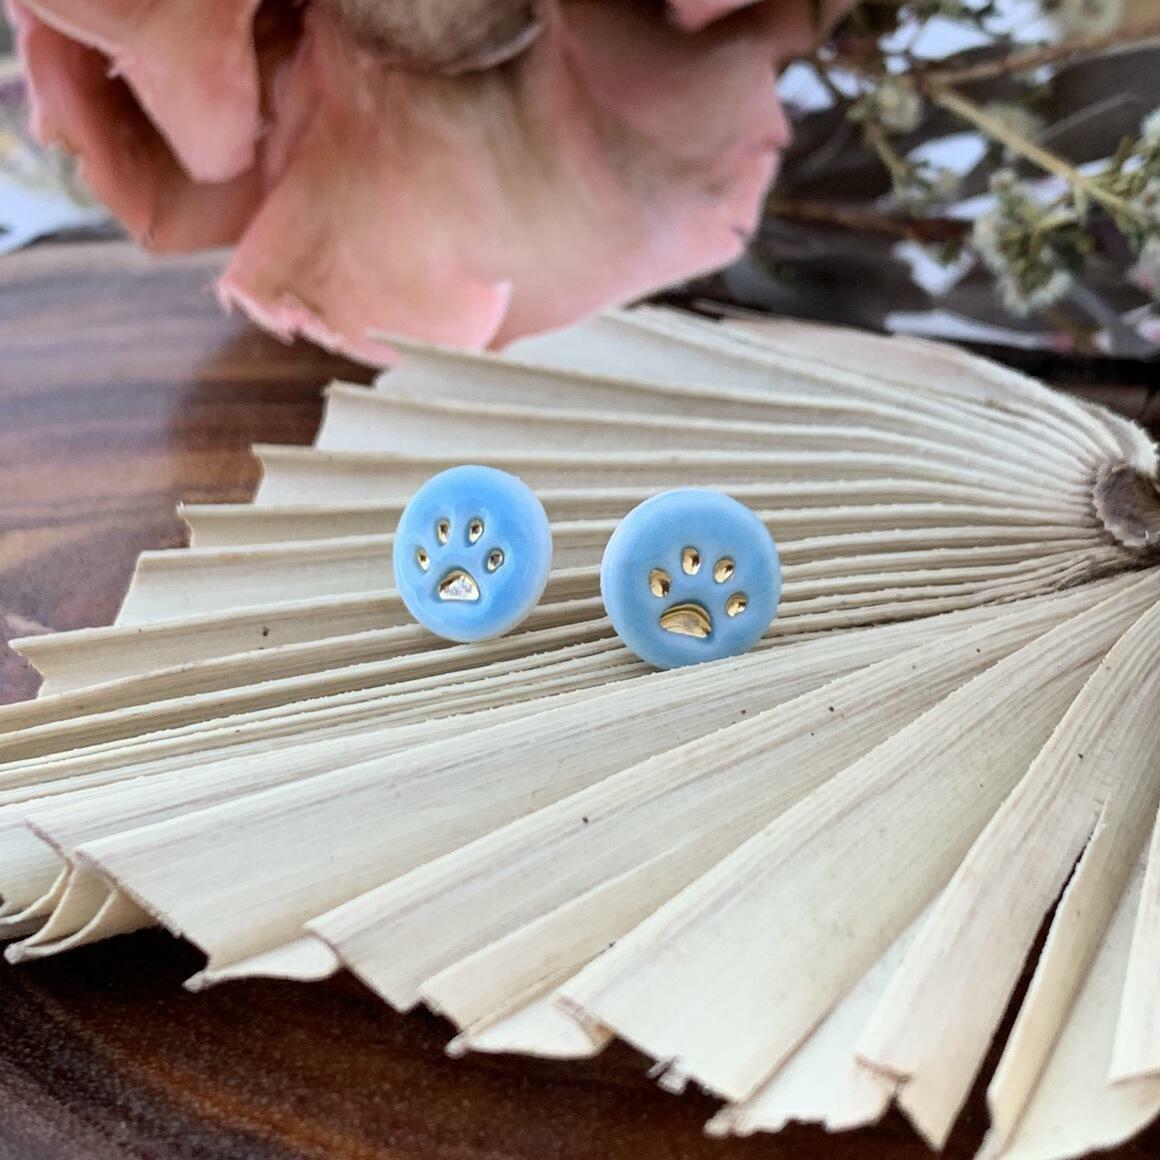 WOLF & CLAY Earrings Light Blue Paw Print in Gold Porcelain Stud Earrings